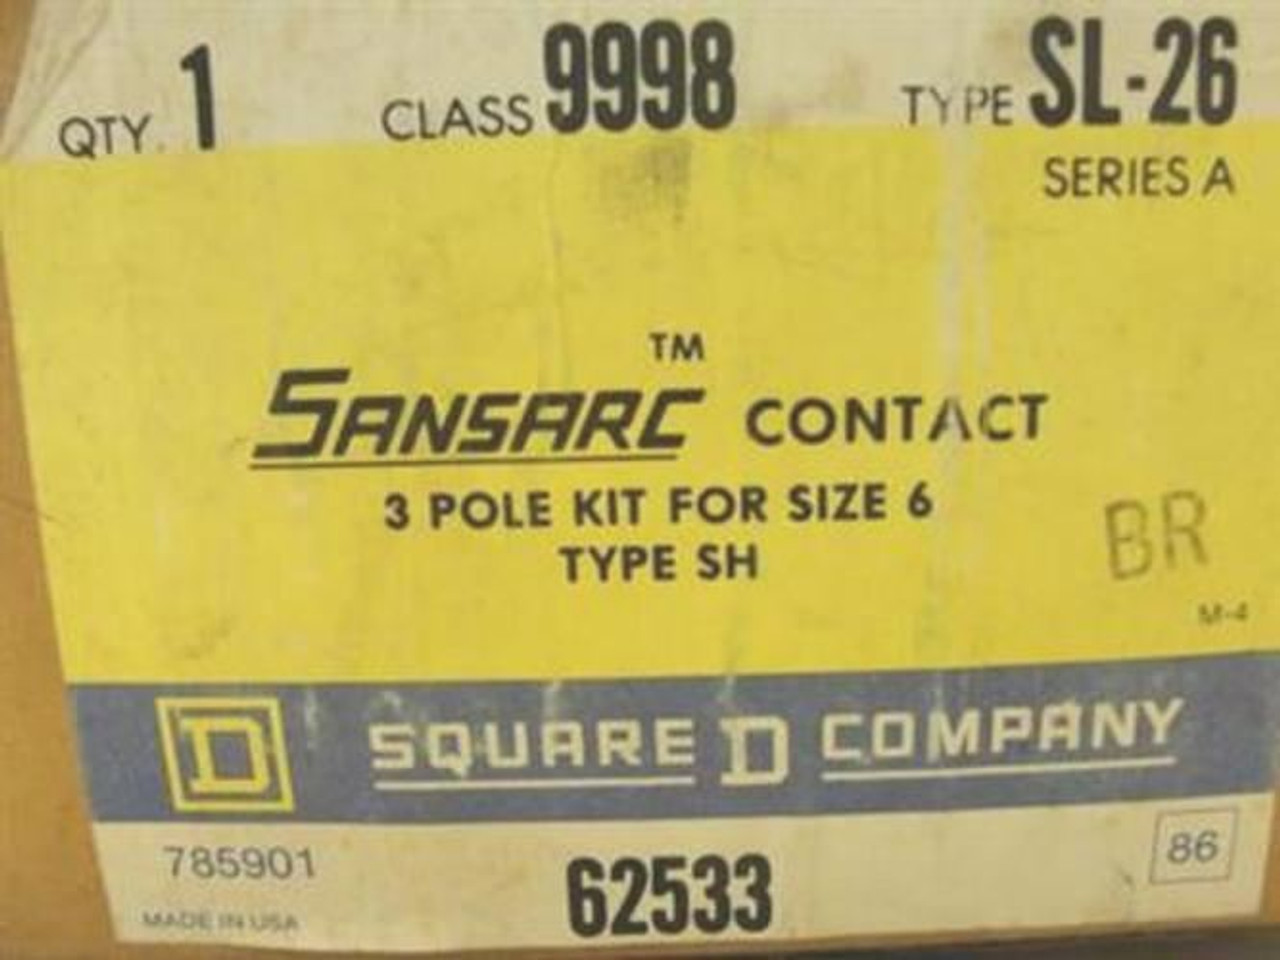 Square D SL-26; Contact Kit; NEMA Size 6; 3-Pole